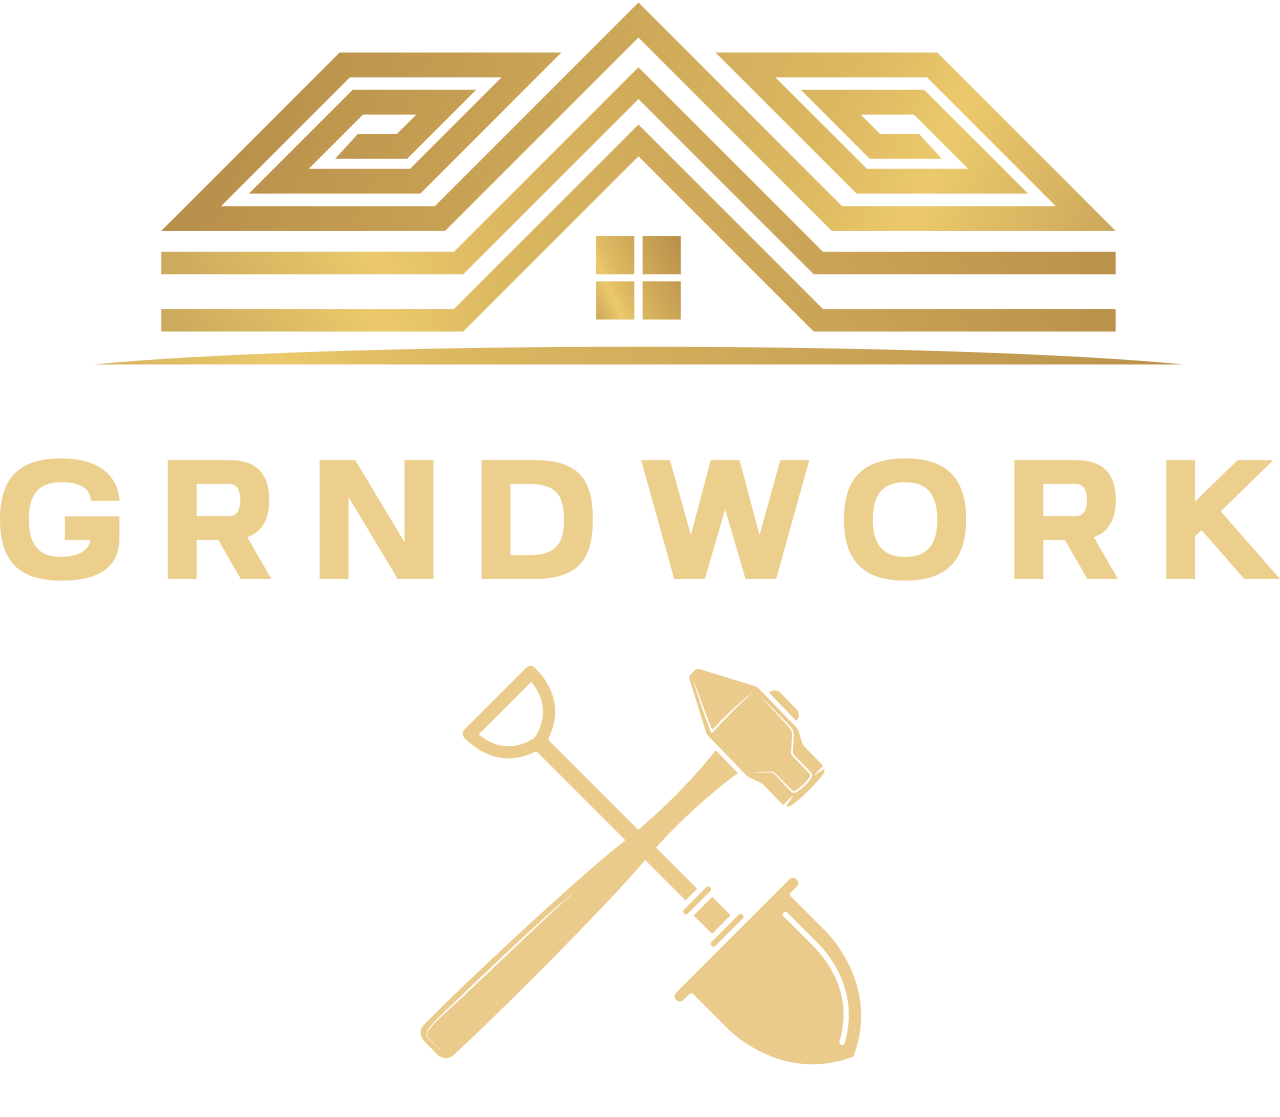 GRNDWORK's logo